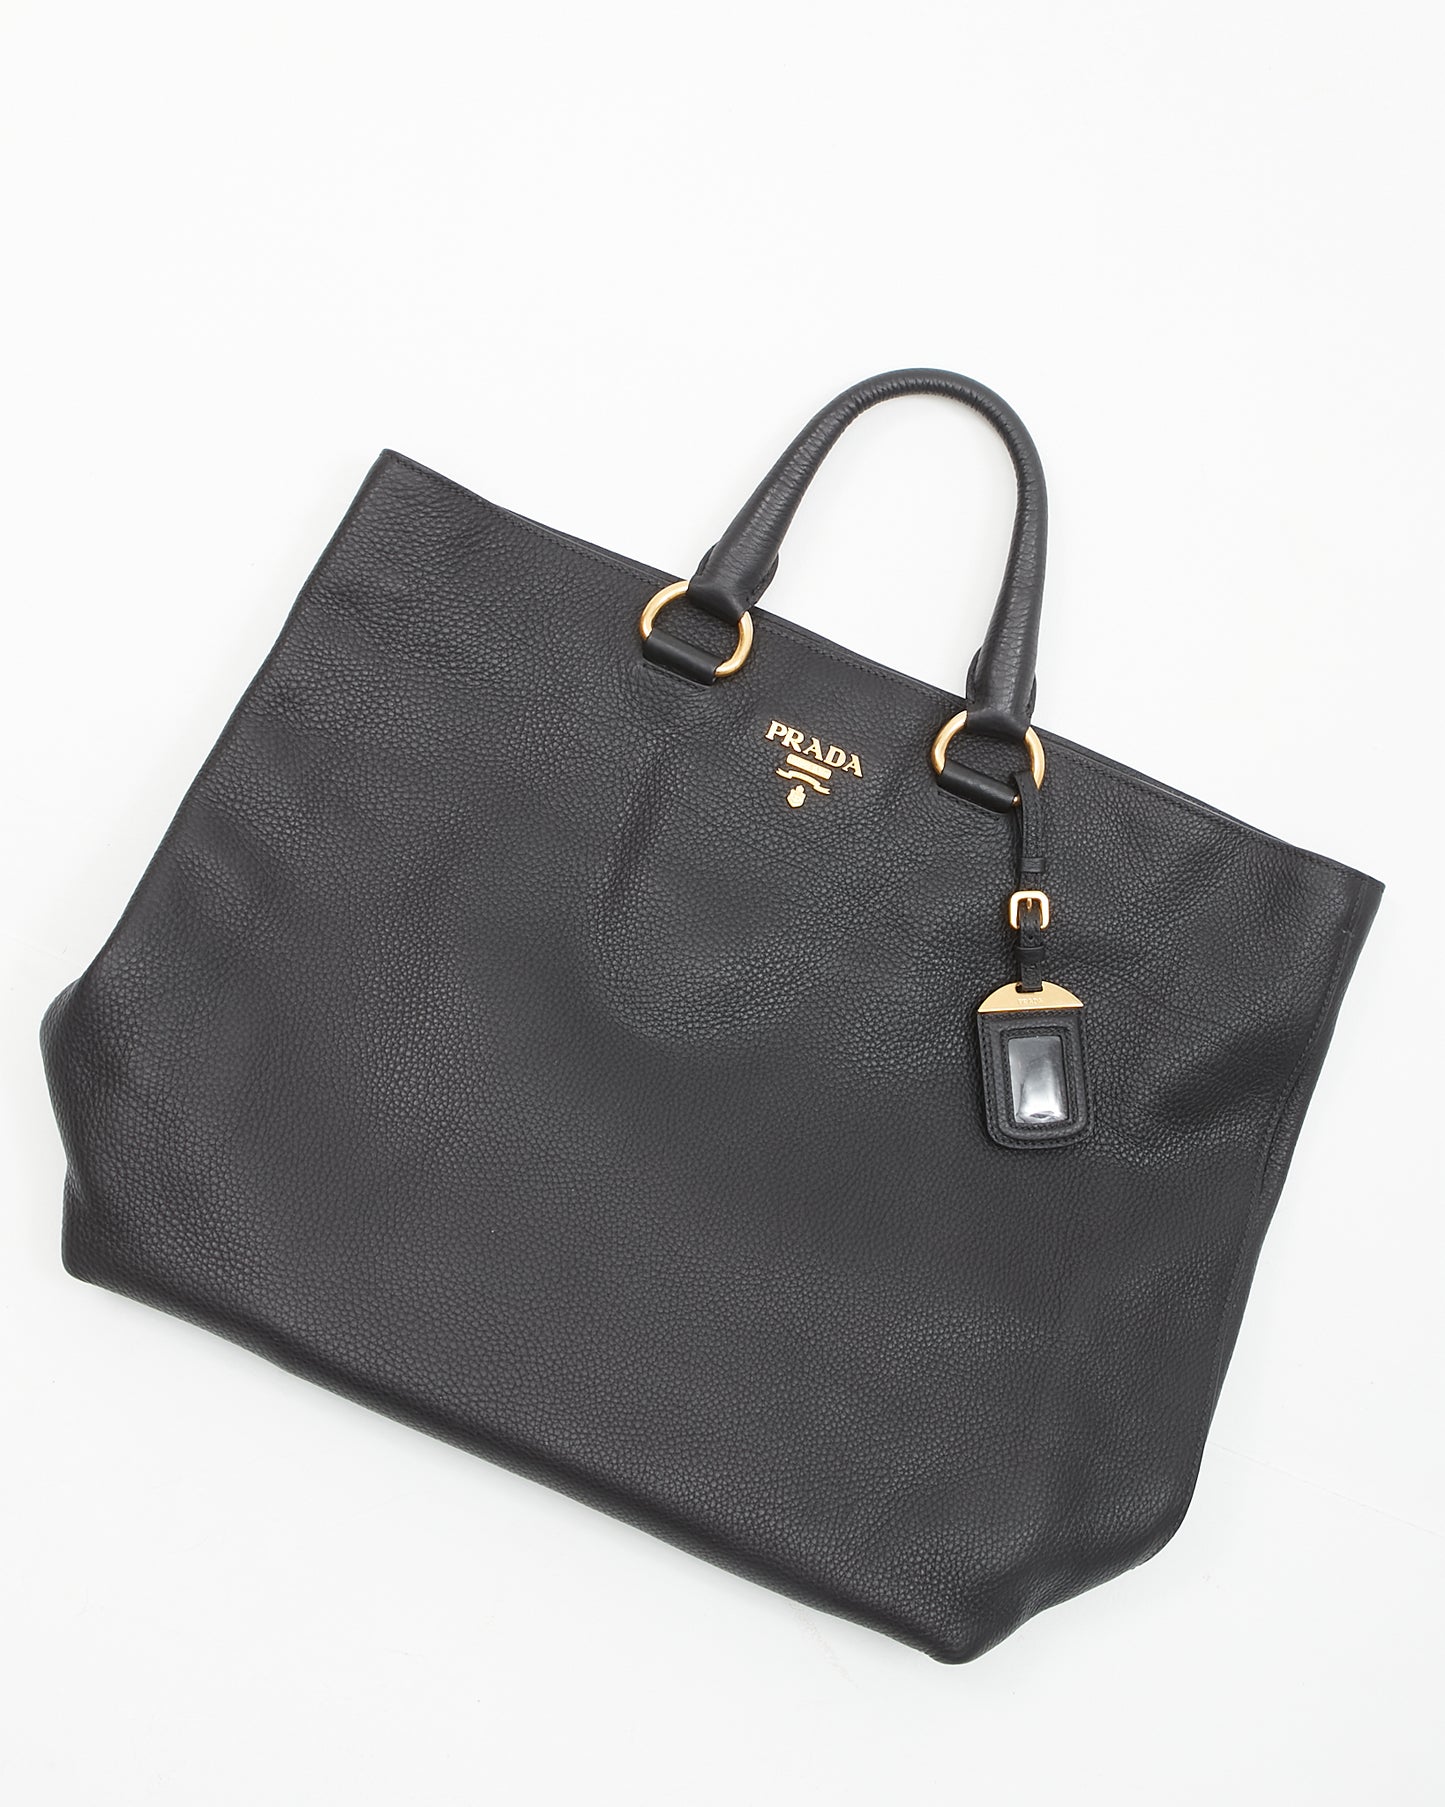 Prada Black Vitello Daino Leather Shopping Tote Bag